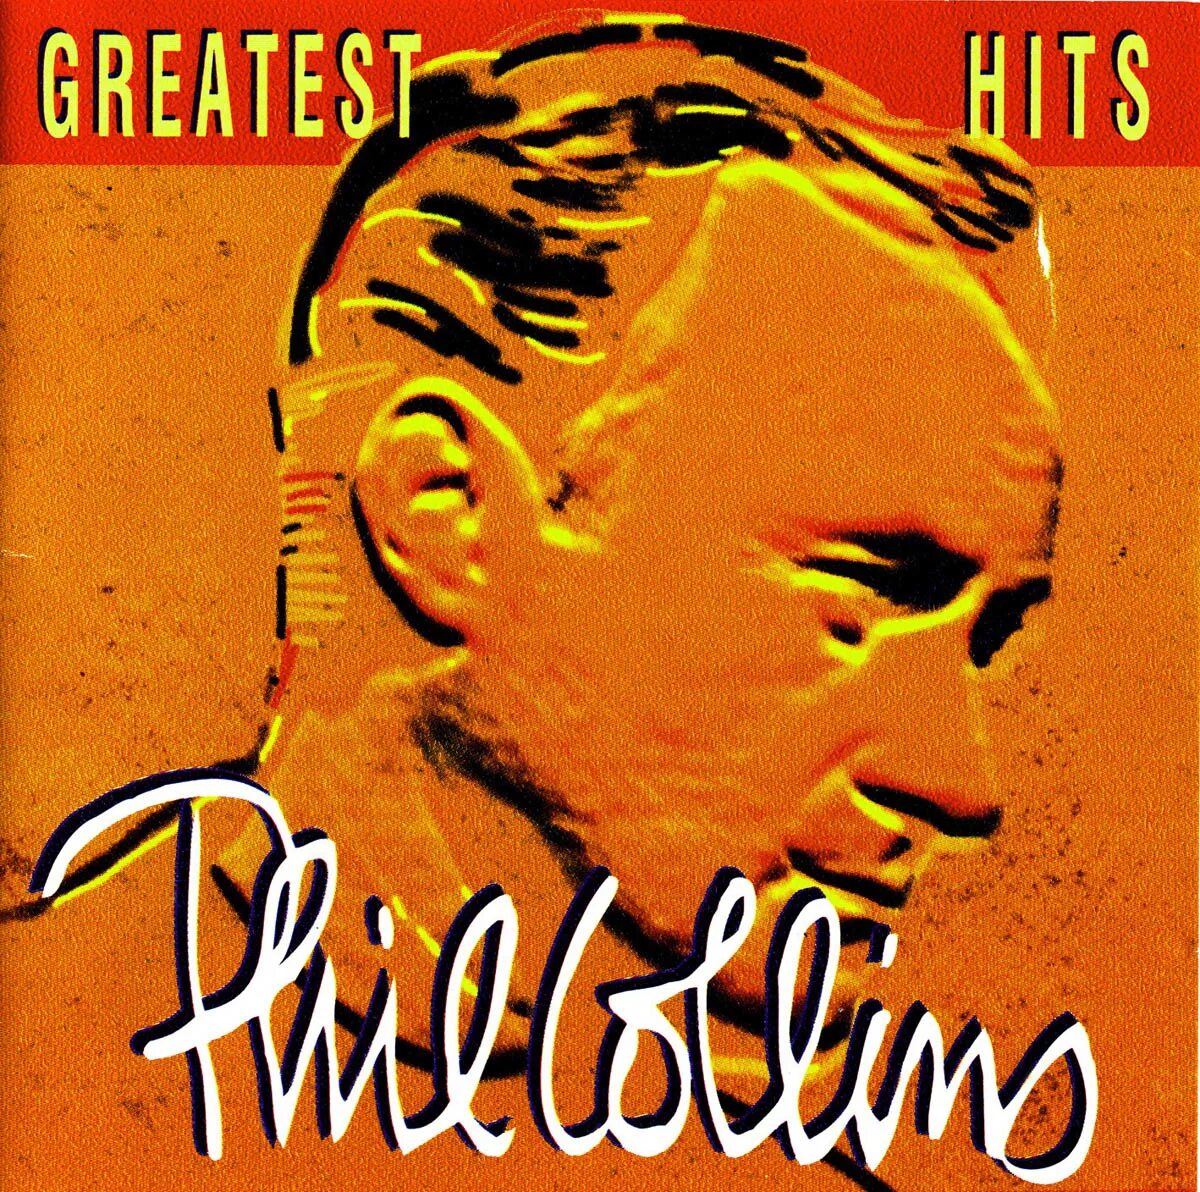 Фил коллинз альбомы. Phil Collins - Greatest Hits 1994. Phil Collins обложка. Фил Коллинз Greatest Hits. Phil Collins обложки альбомов.